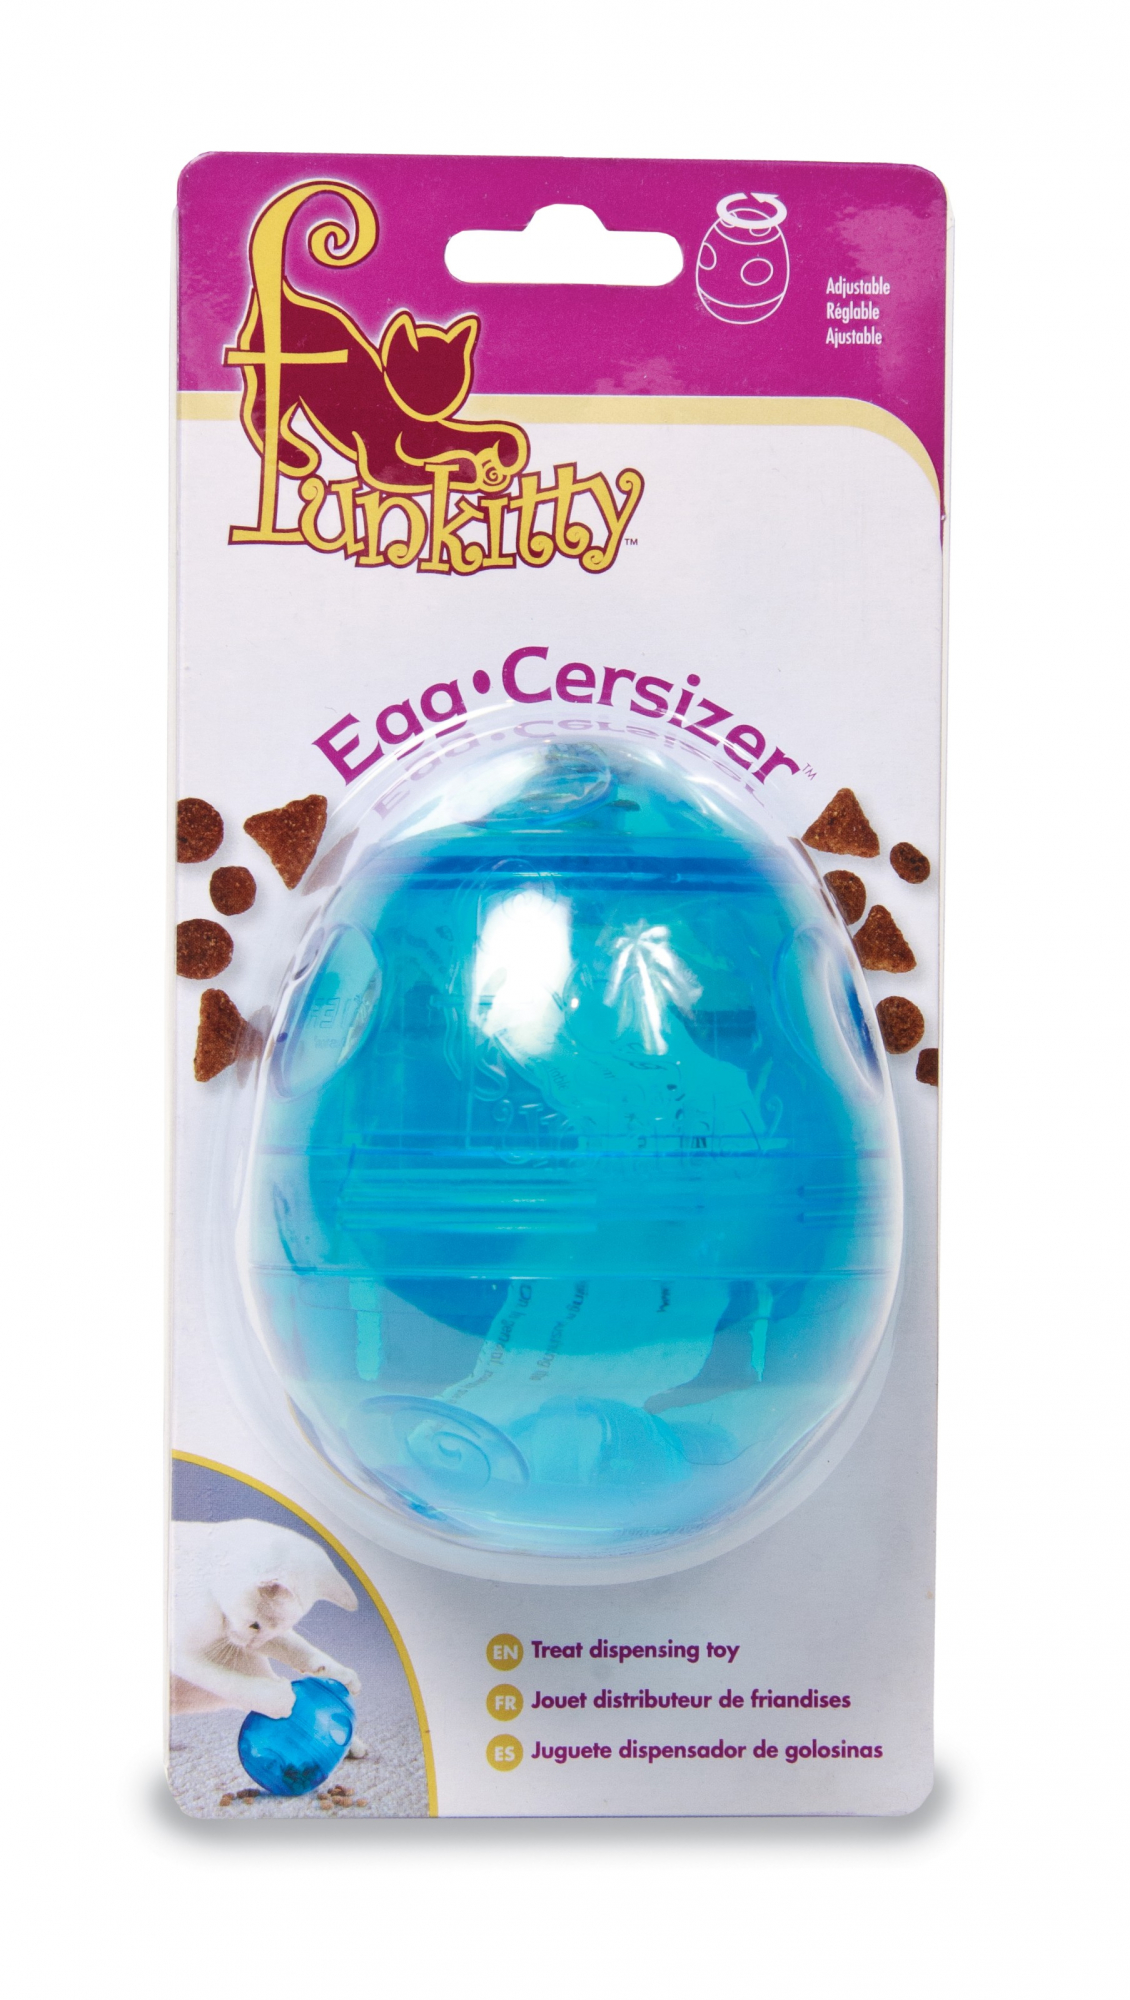 Funkitty egg-cersizer